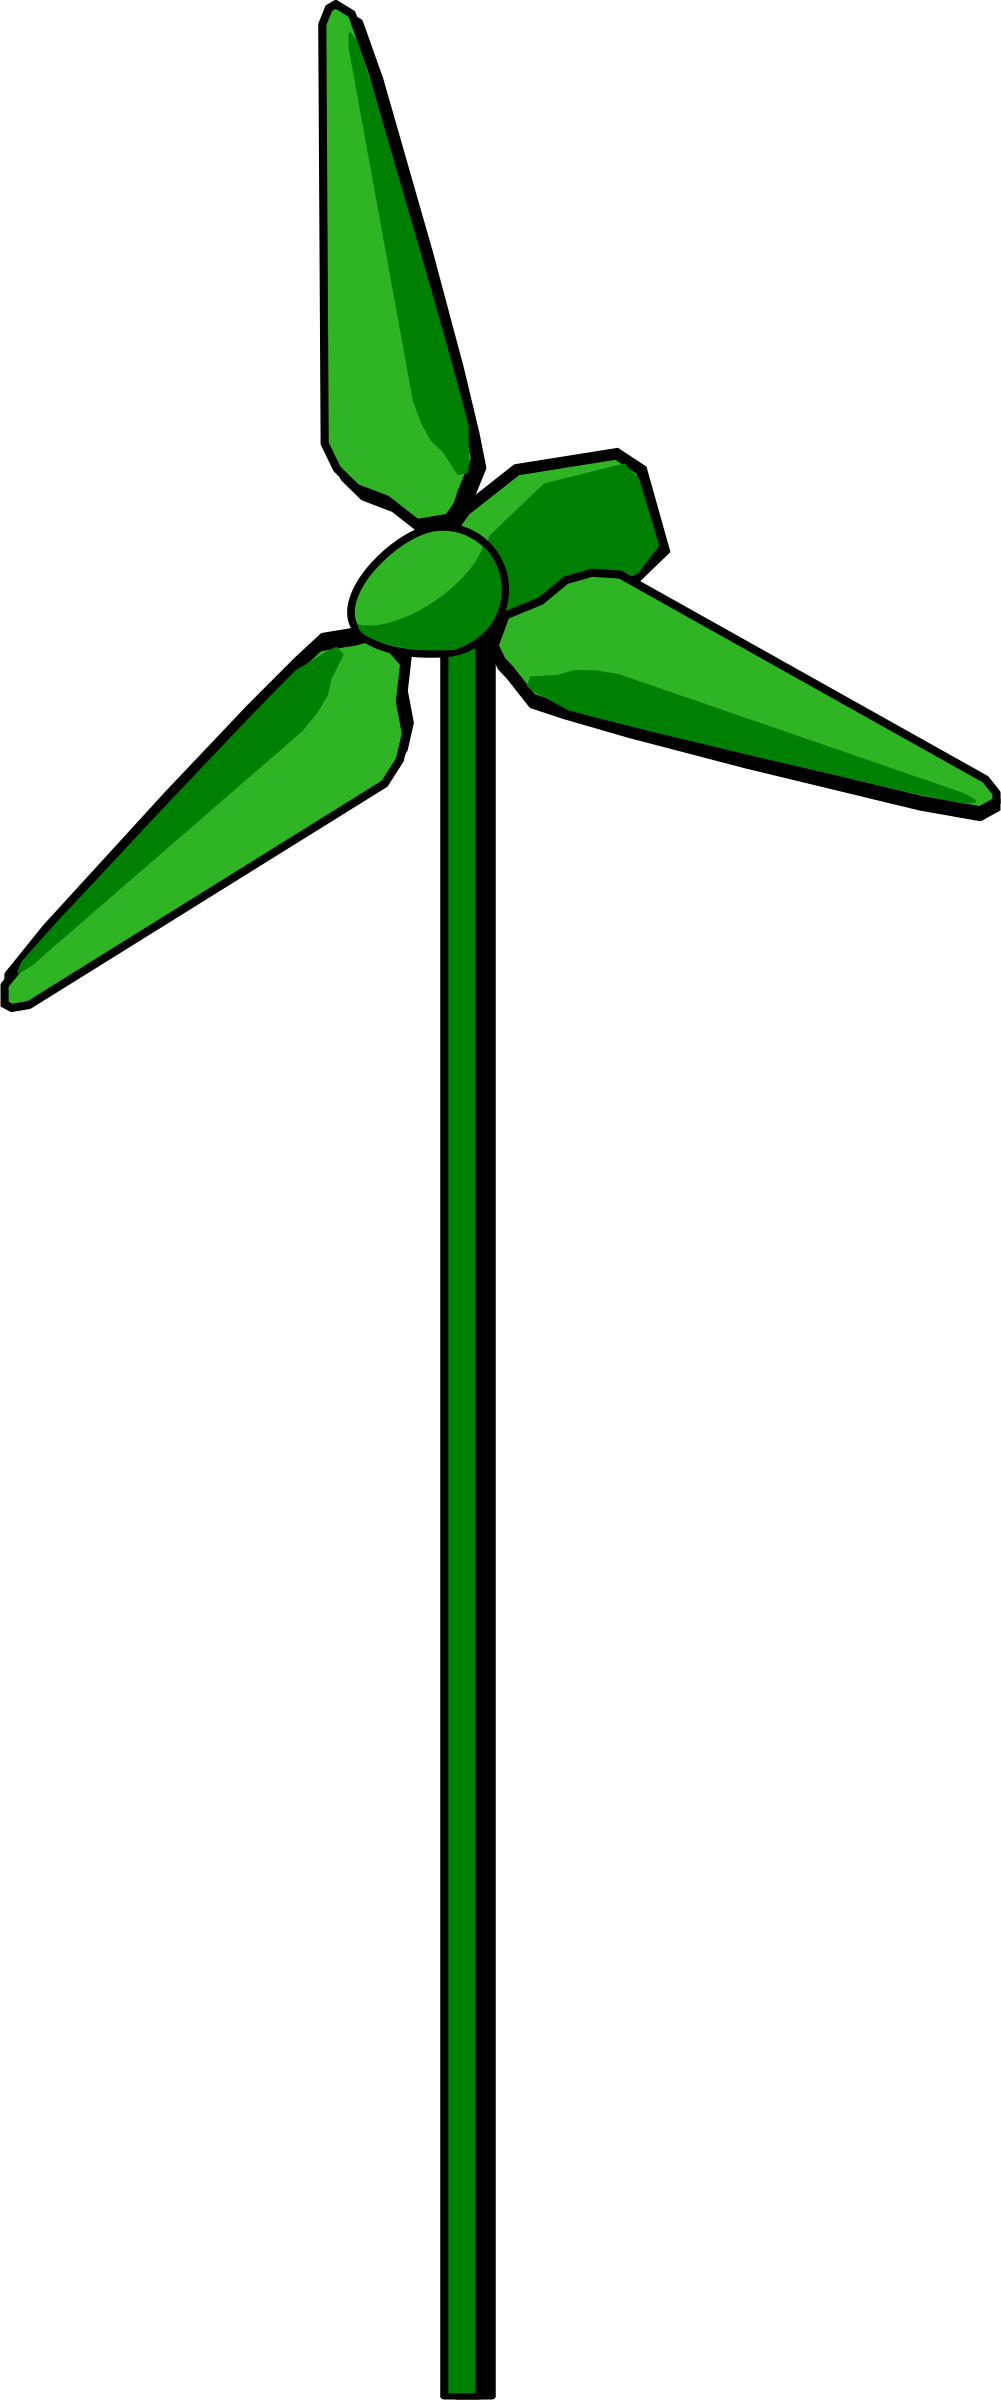 Free Vector Energy Positive Wind Turbine Green Clip - Moving Wind Turbine Animation (1001x2400)